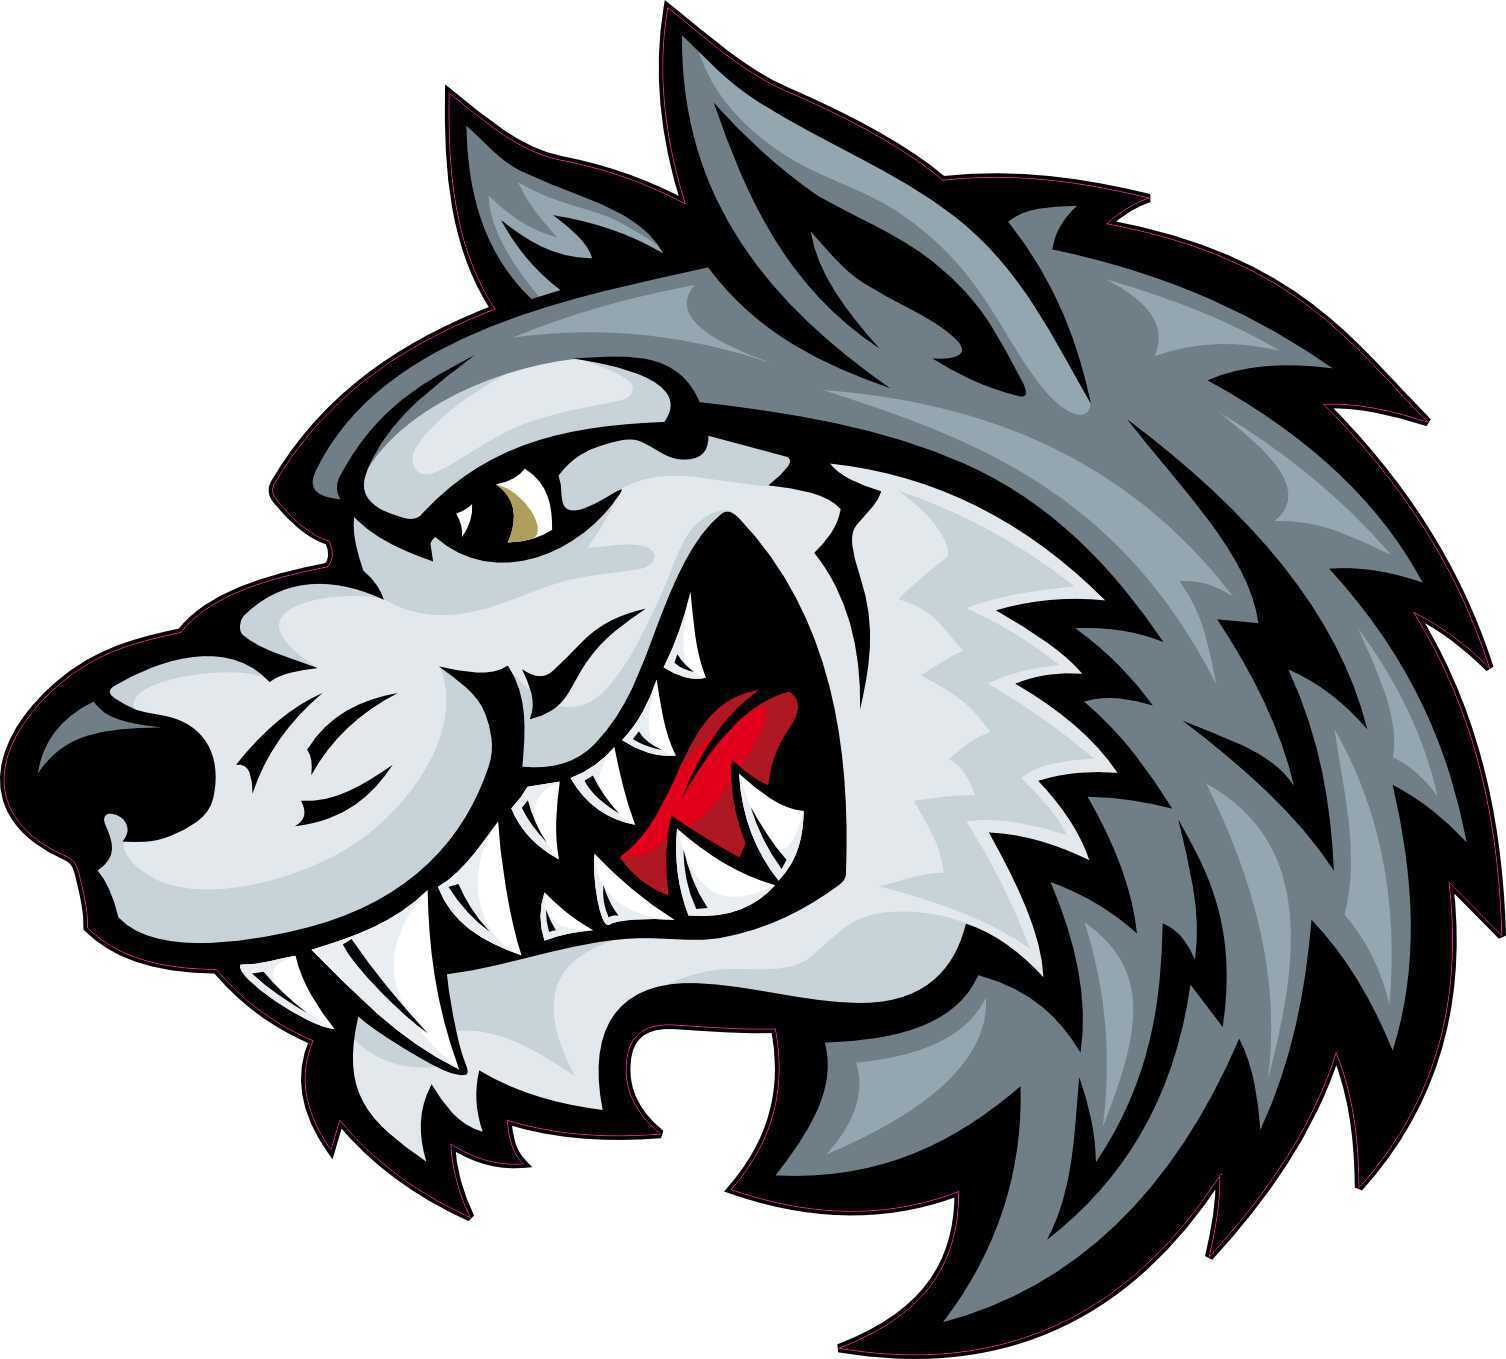 StickerTalk Left-Facing Wolf Mascot Sticker, 5 inches x 4.5 inches